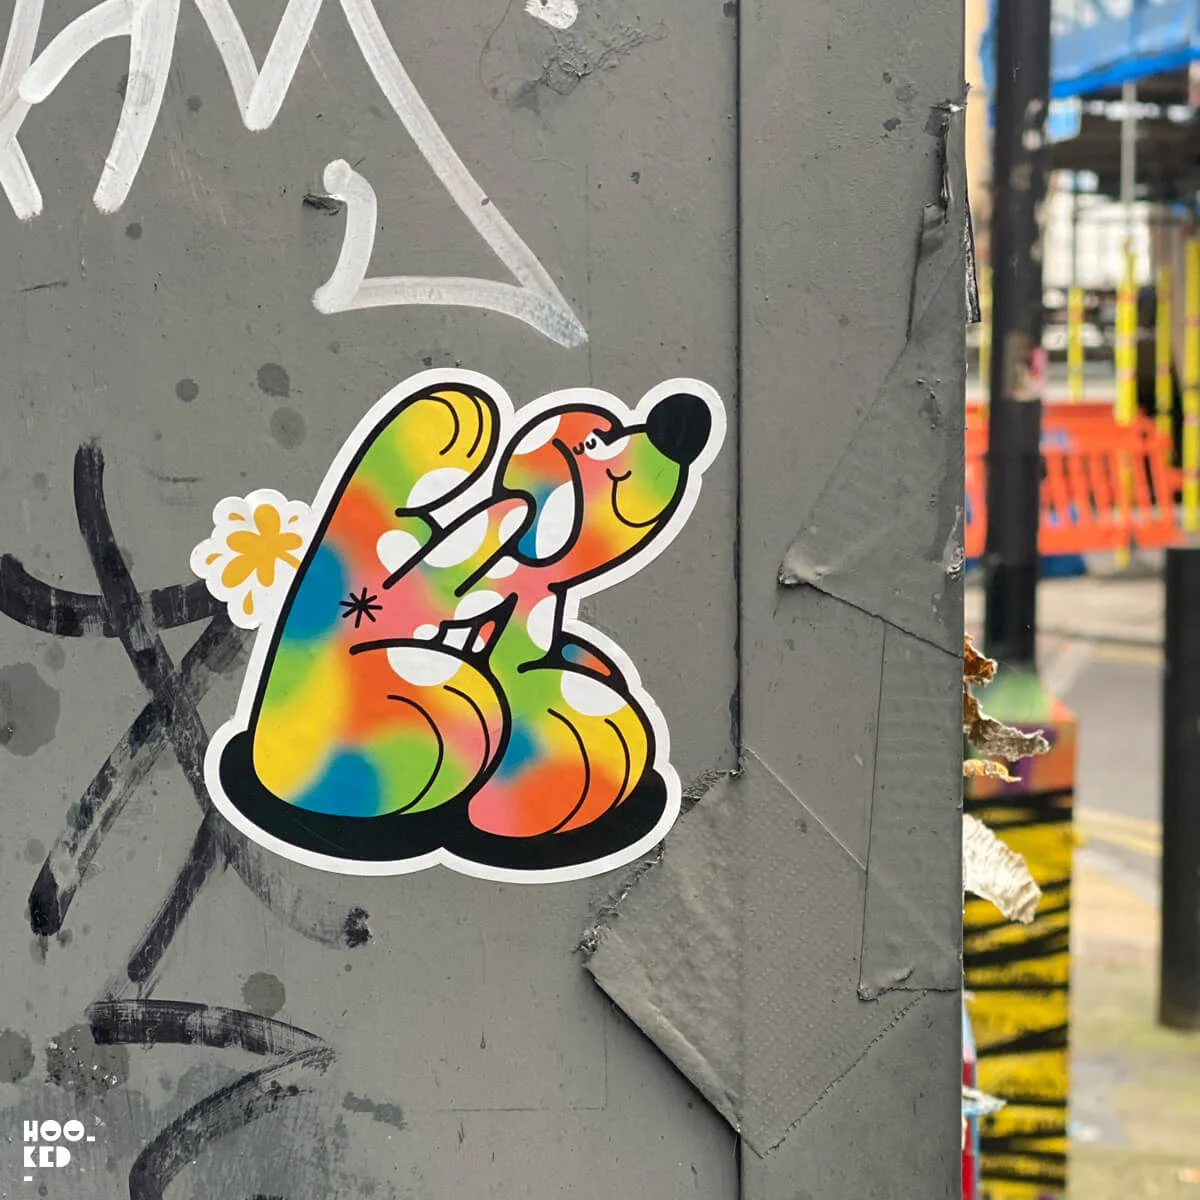 Shoreditch Street Art Stickers featuring a colourful cartoon dog